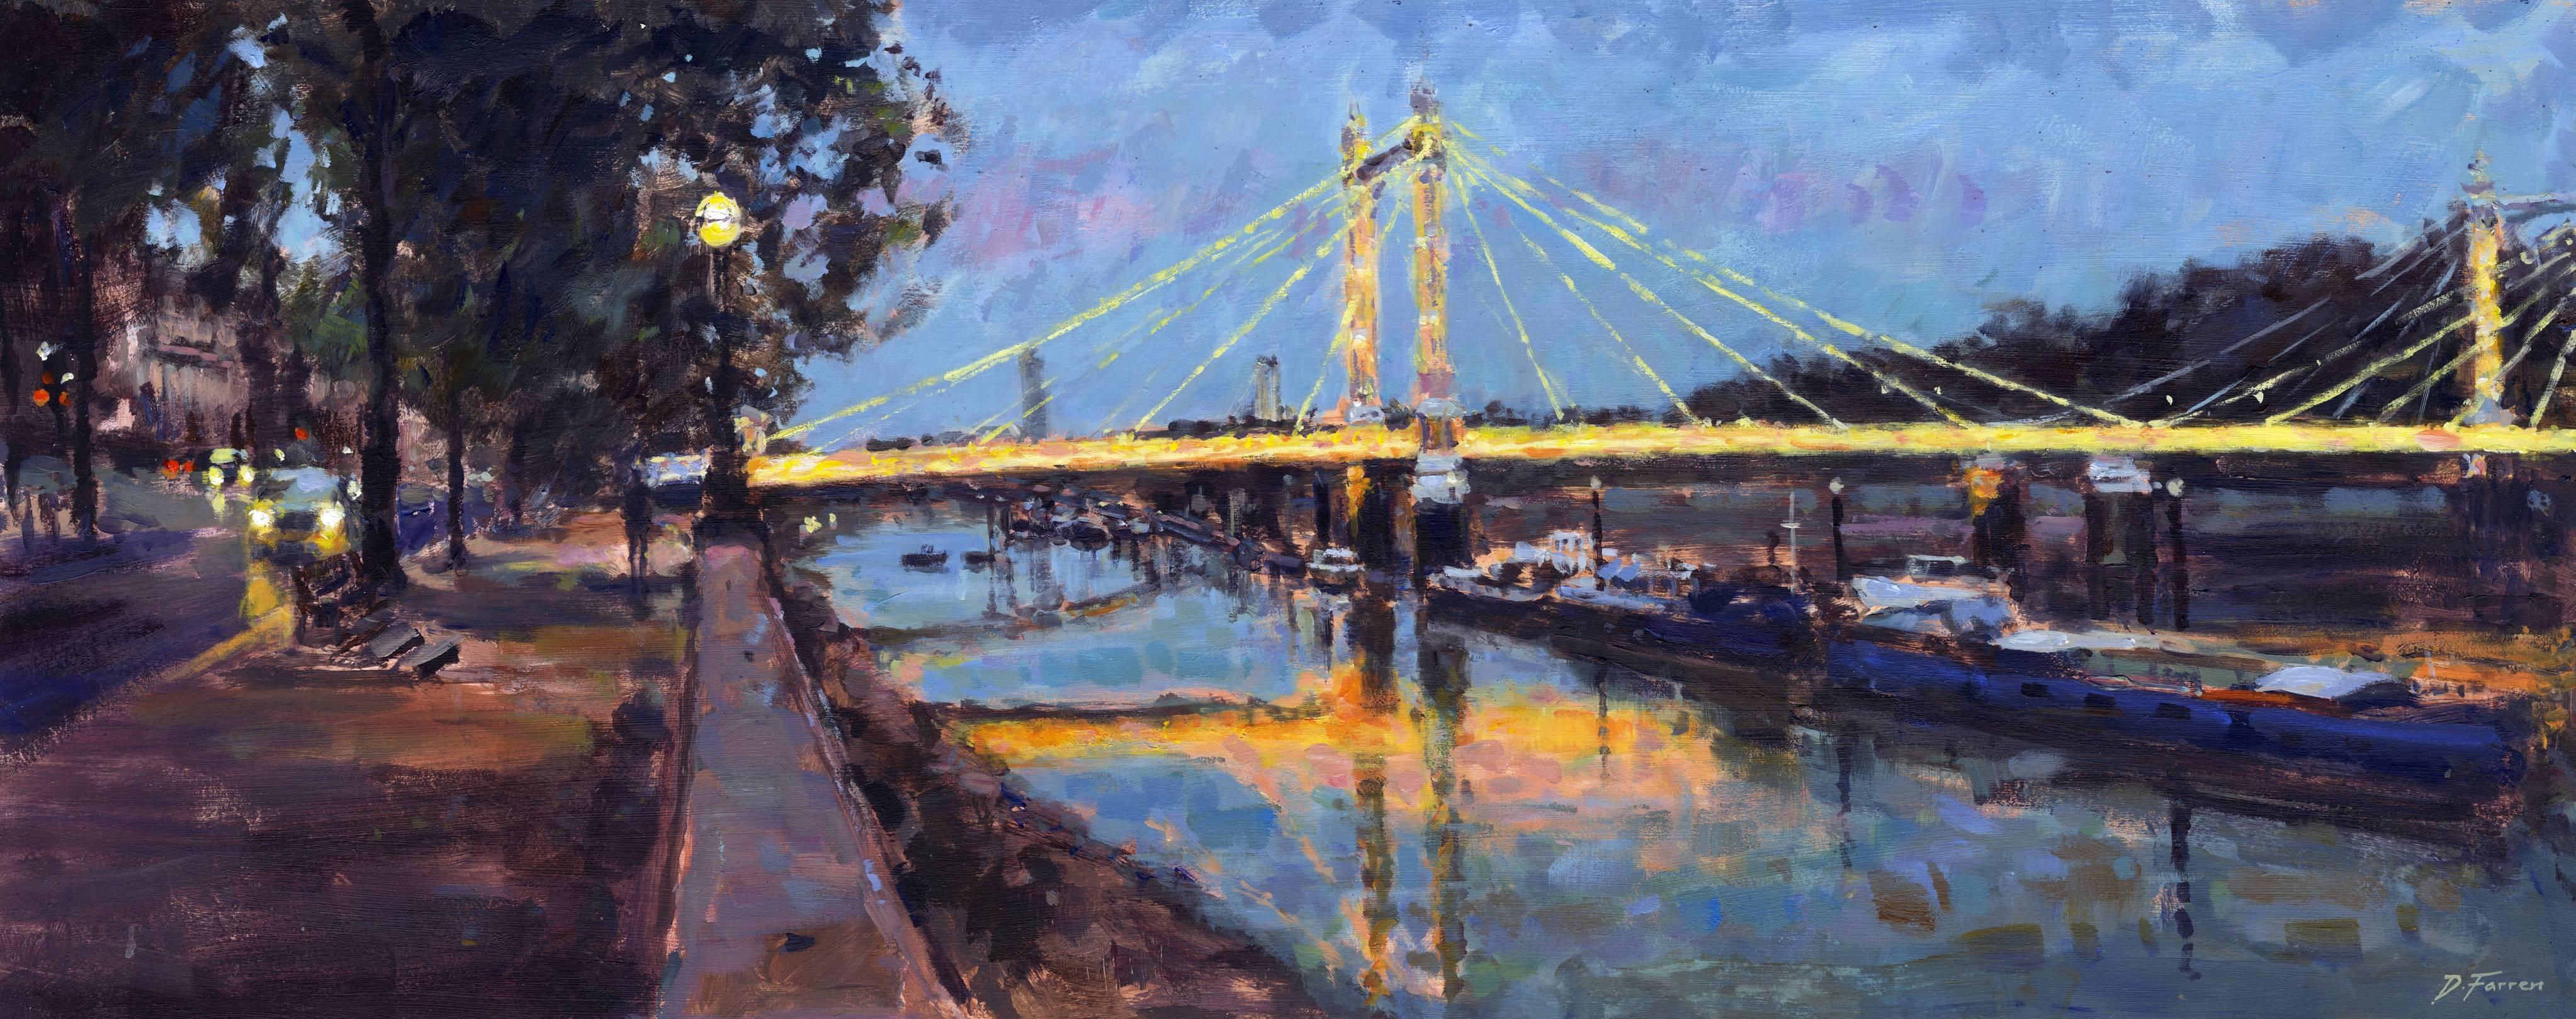 David Farren Landscape Painting - Nightfall , Albert Bridge Original Cityscape Painting 